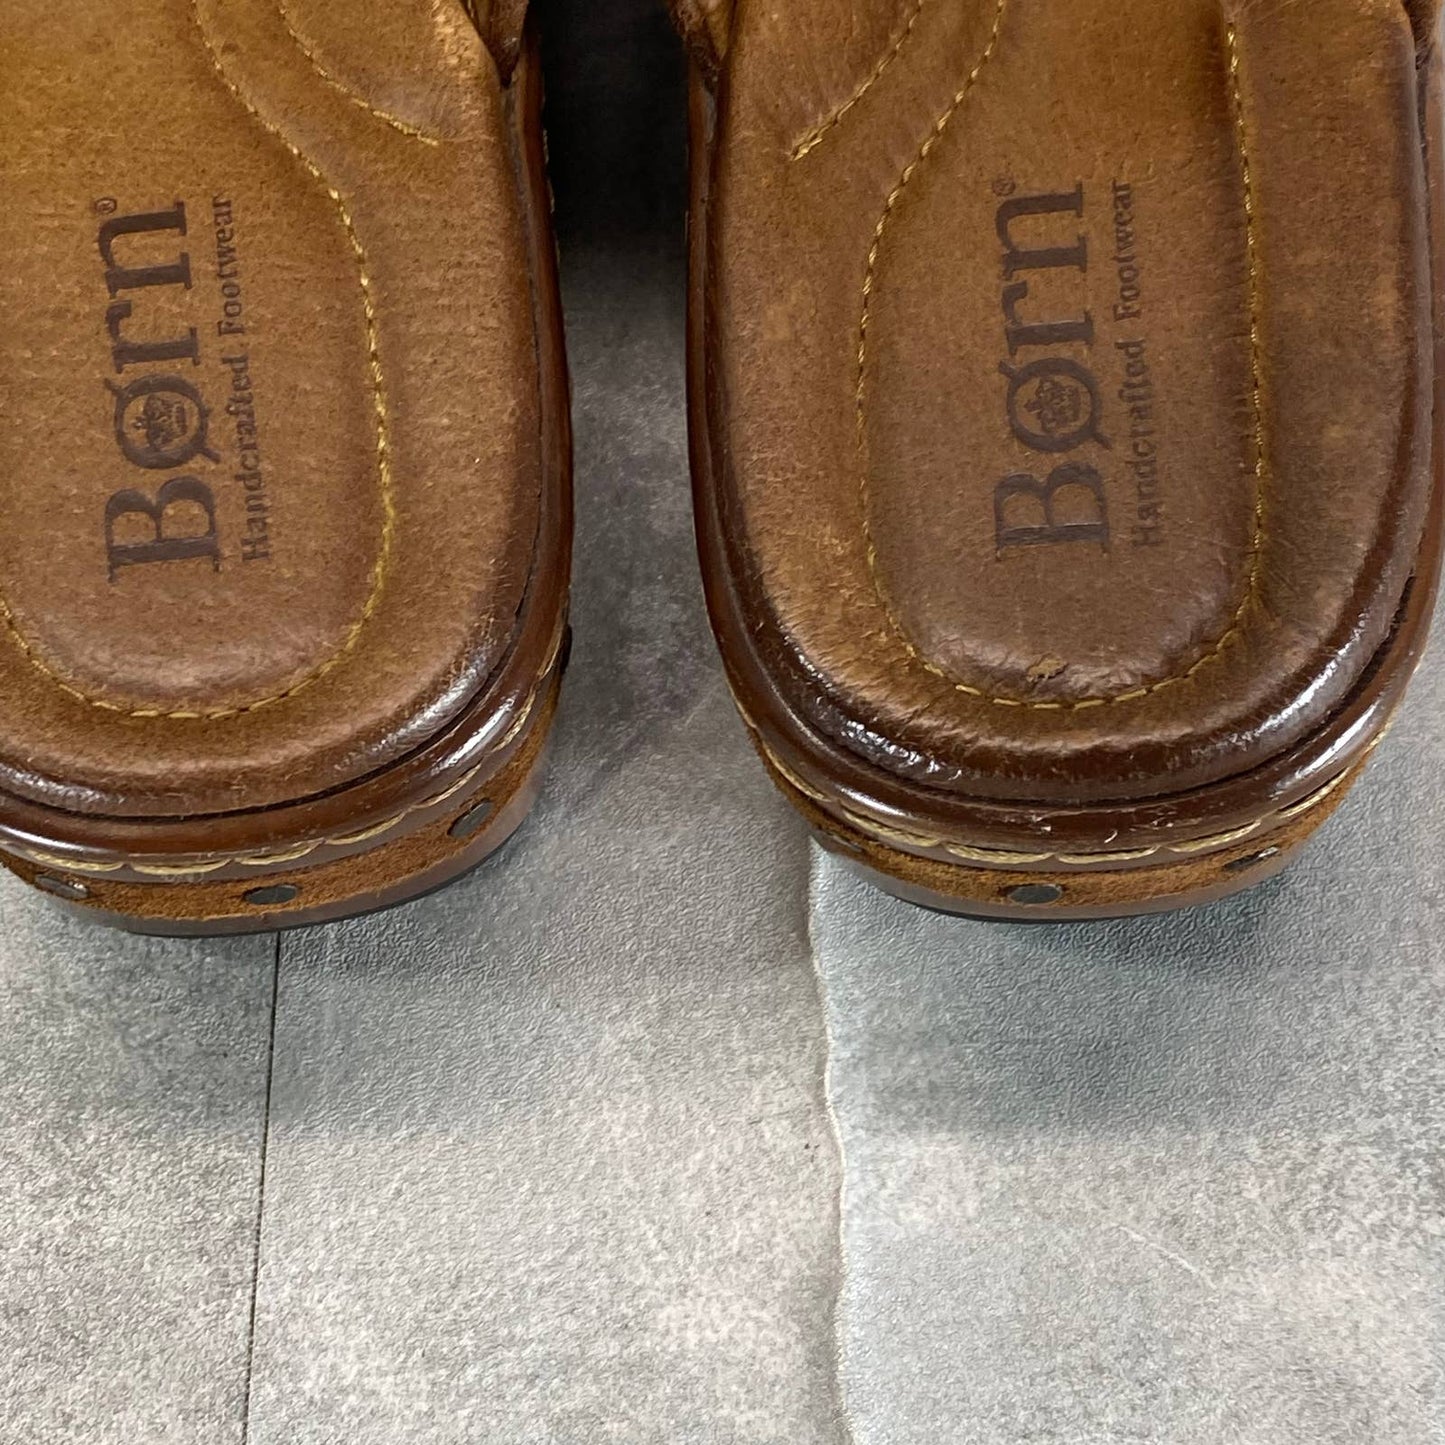 BORN Women's Brown Leather Yucatan Round-Toe Comfort Slip-On Shoes SZ 7